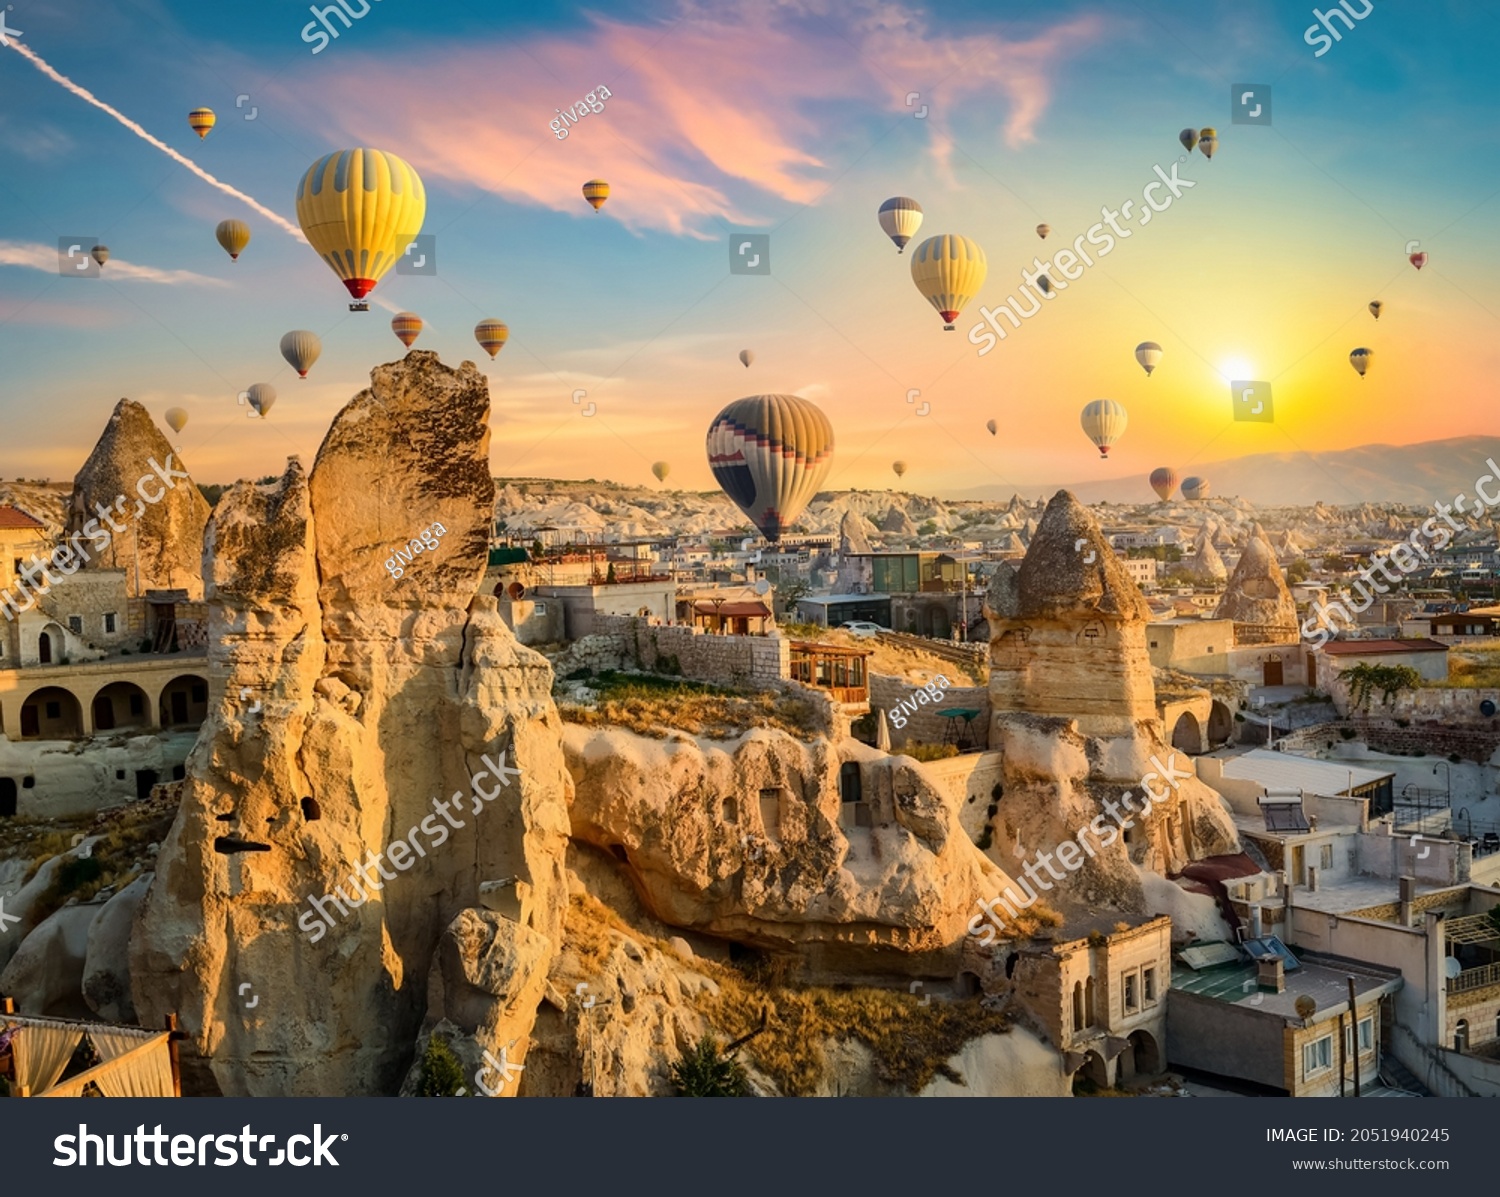 Hot air balloons at sunset in Goreme village, Cappadocia, Turkey #2051940245